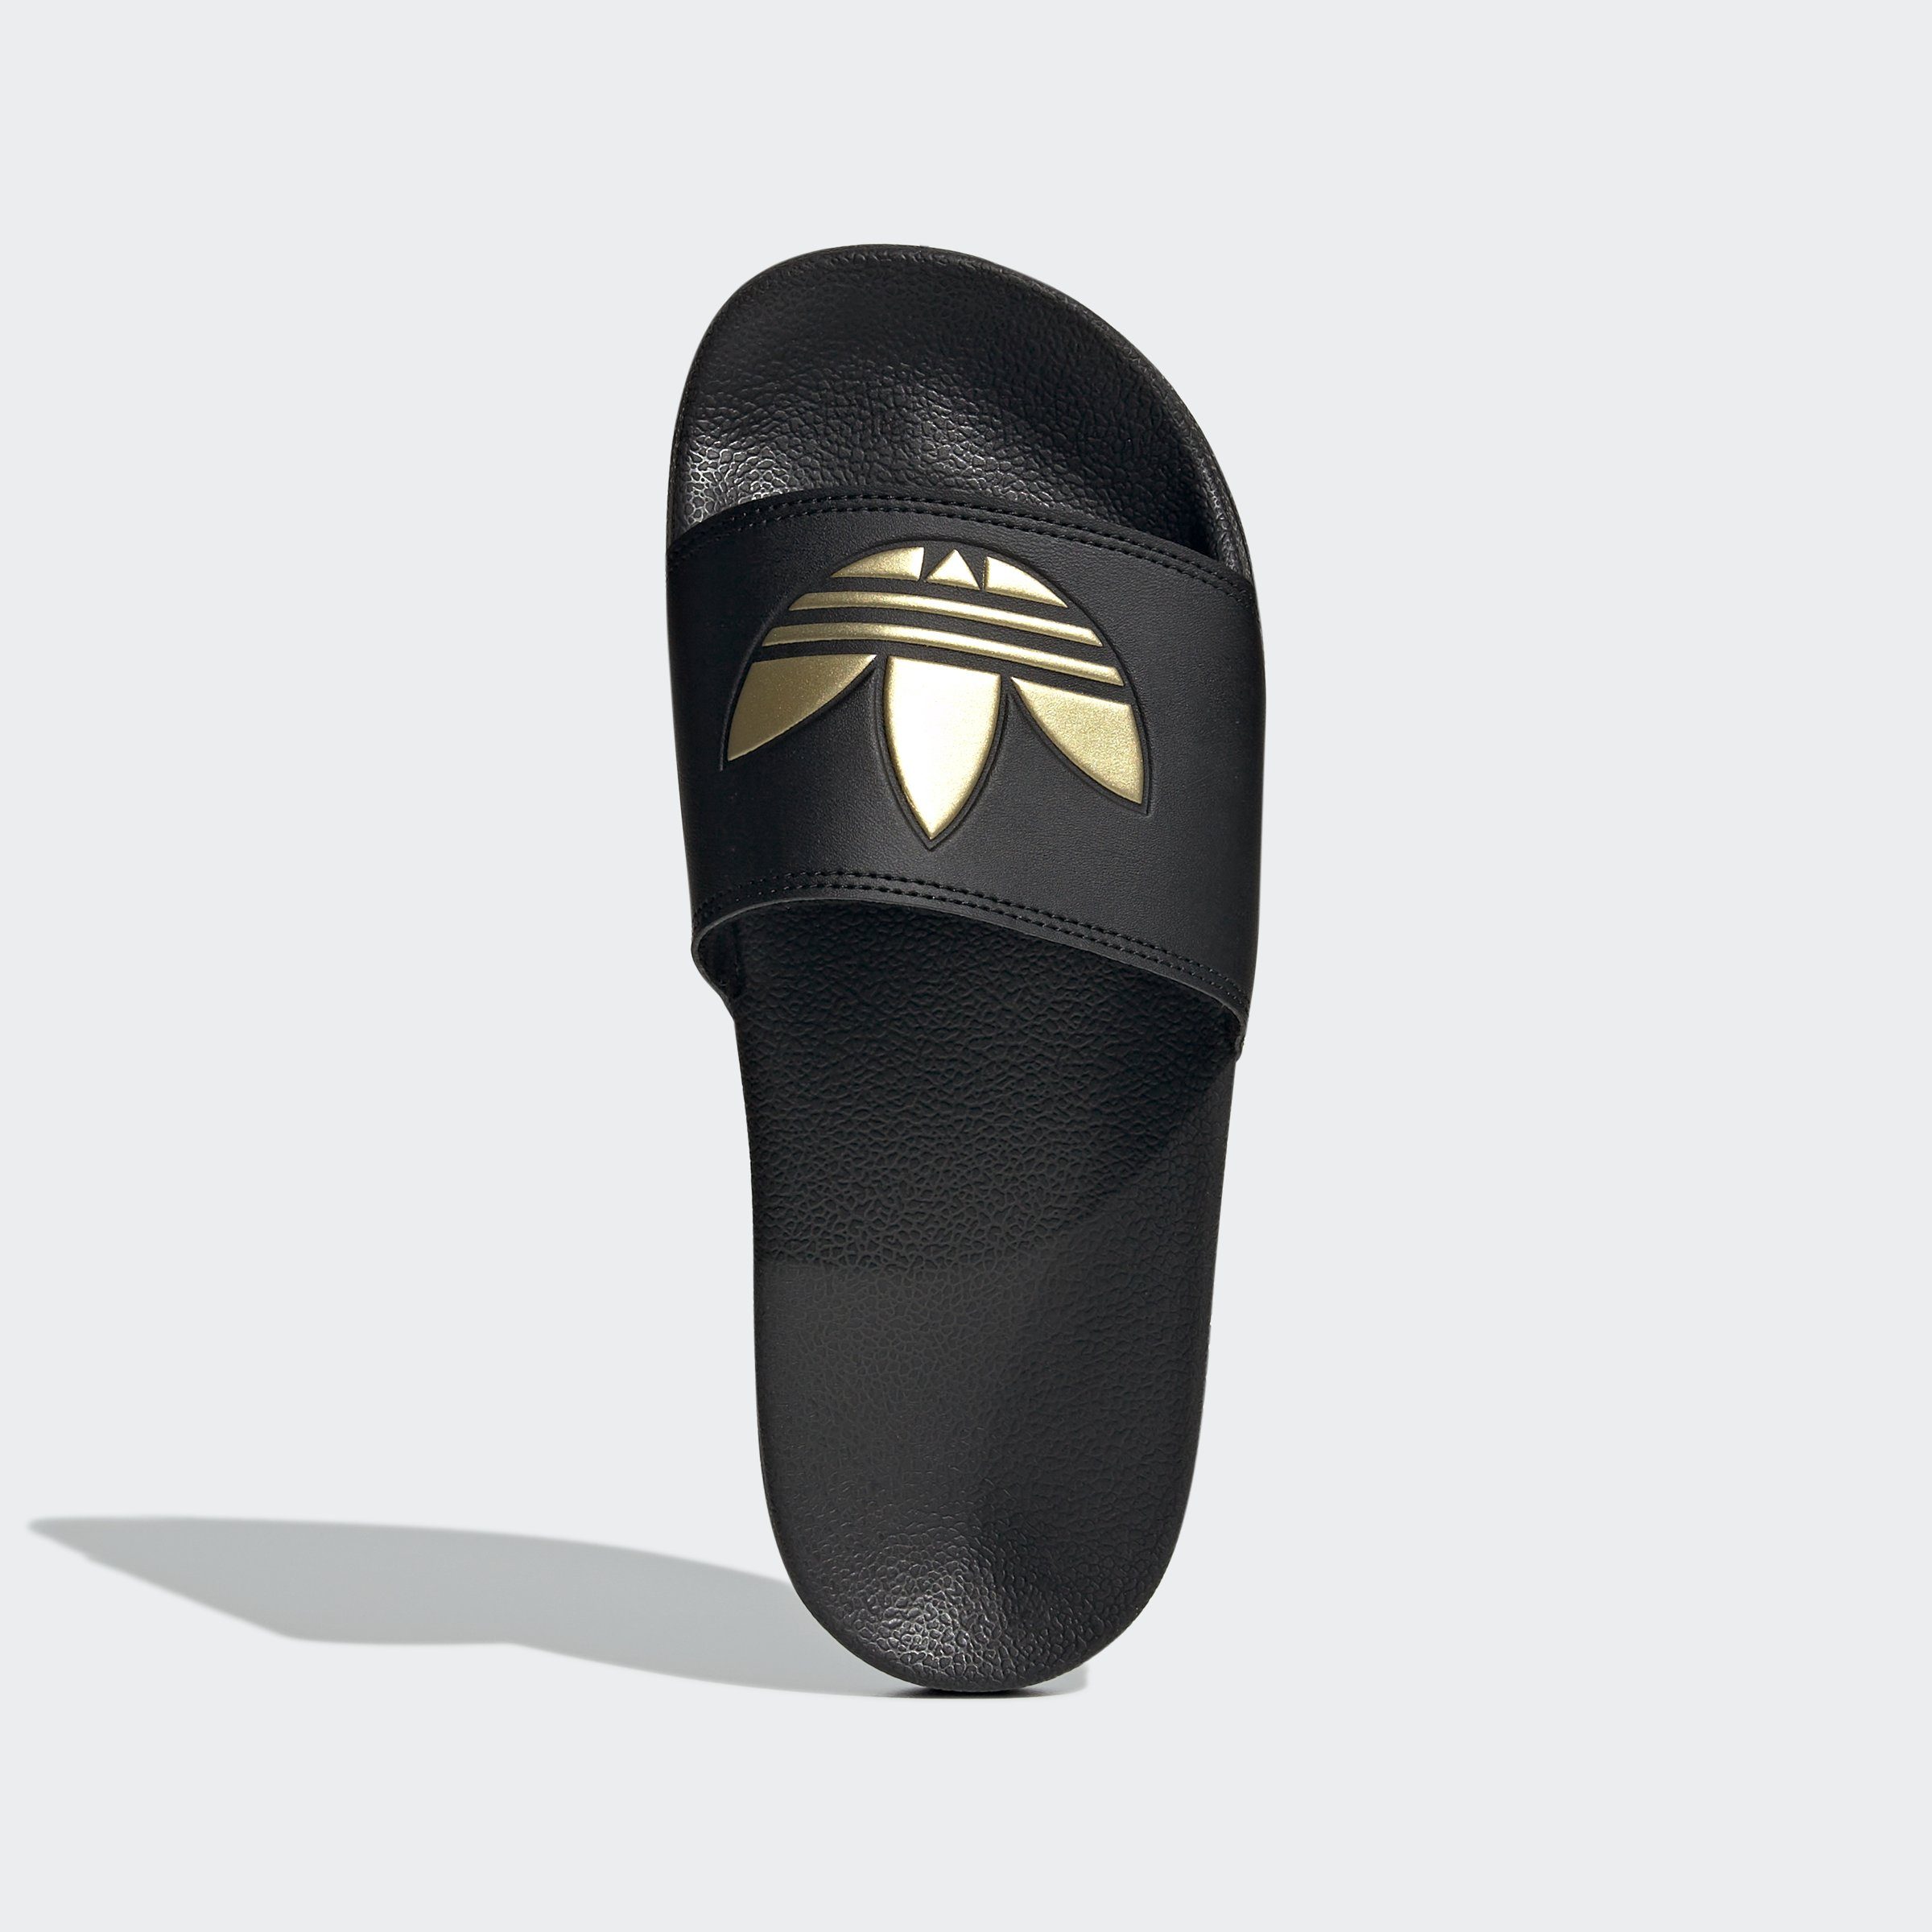 / Badesandale Gold Black Black Core Originals / Core ADILETTE adidas LITE Matte